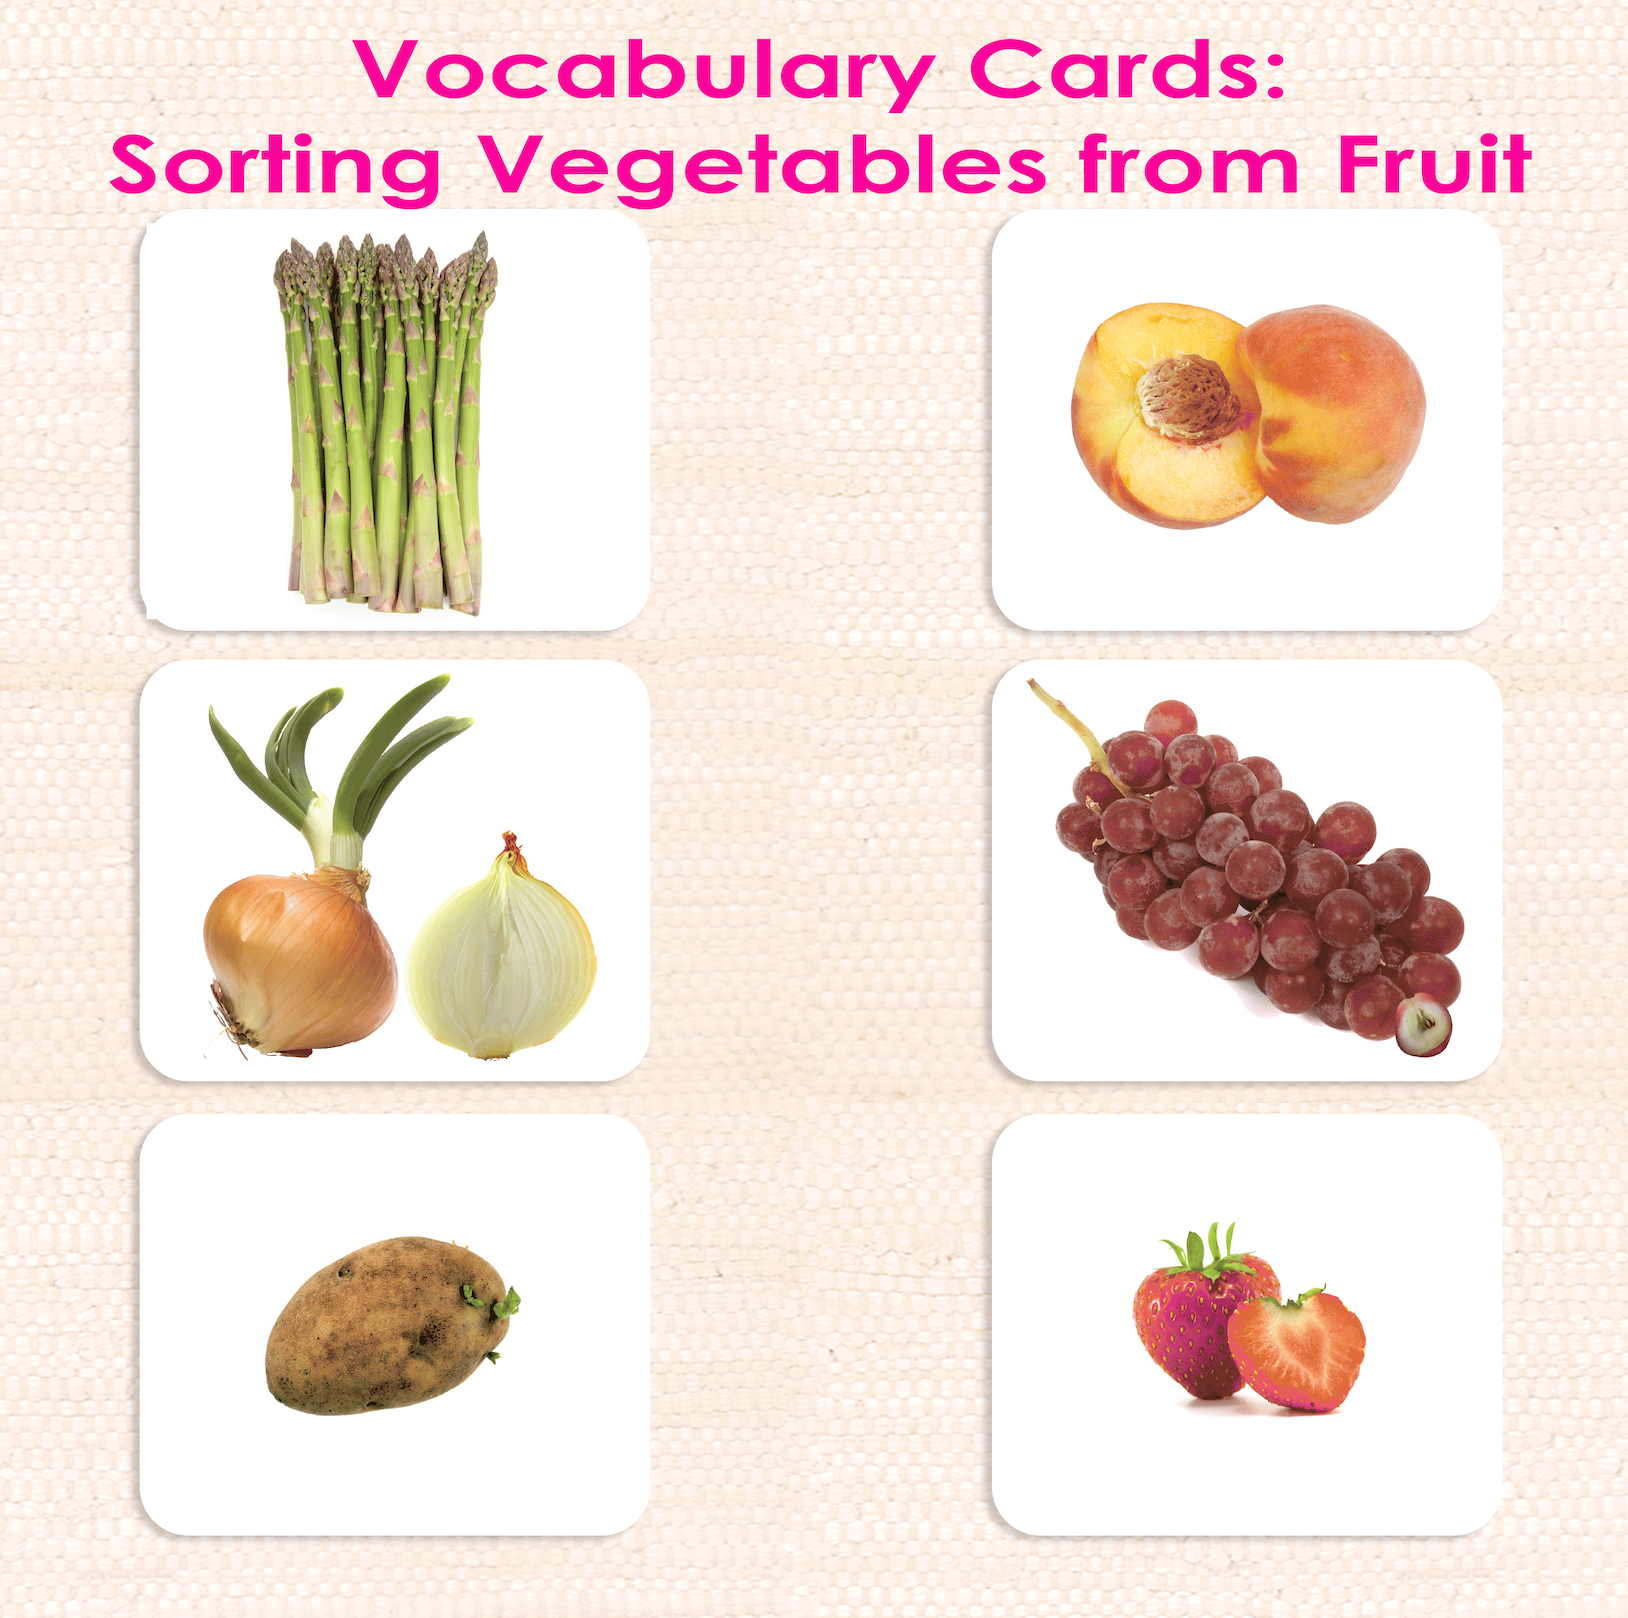 Fruit Vocabulary